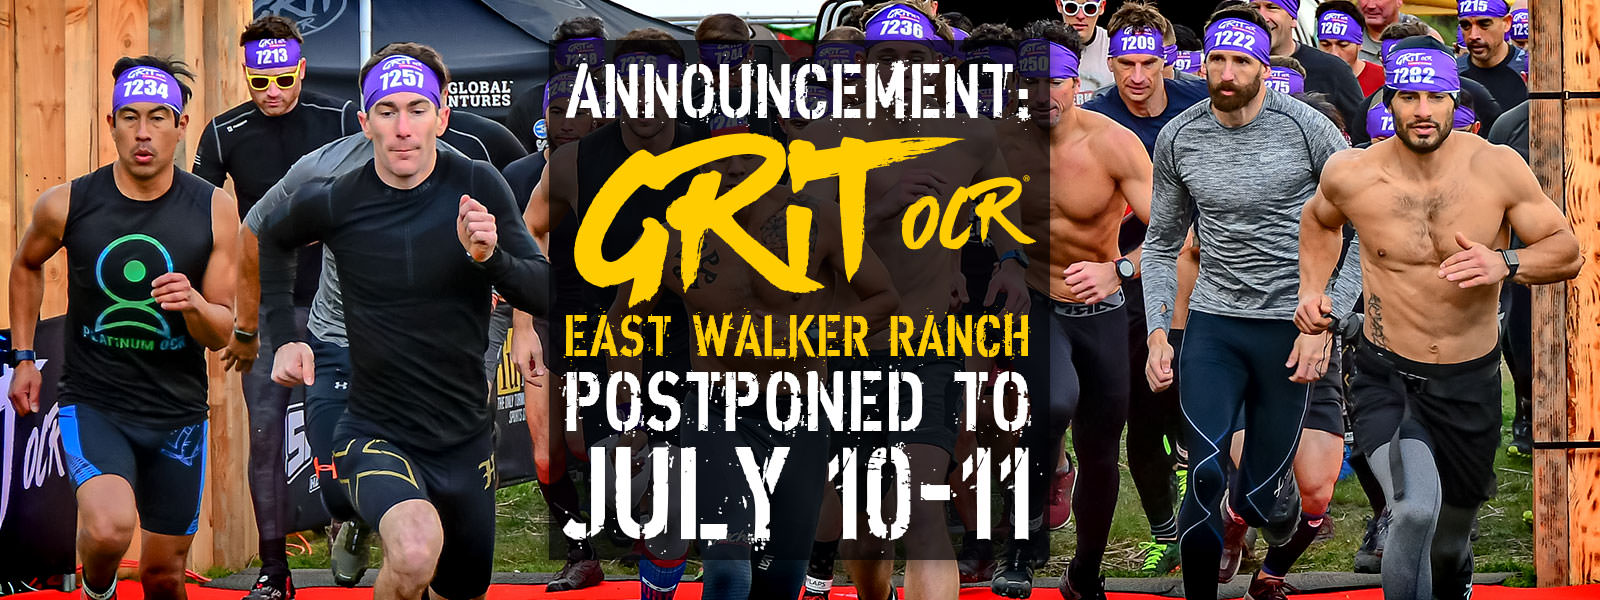 East Walker Ranch Postponed To July